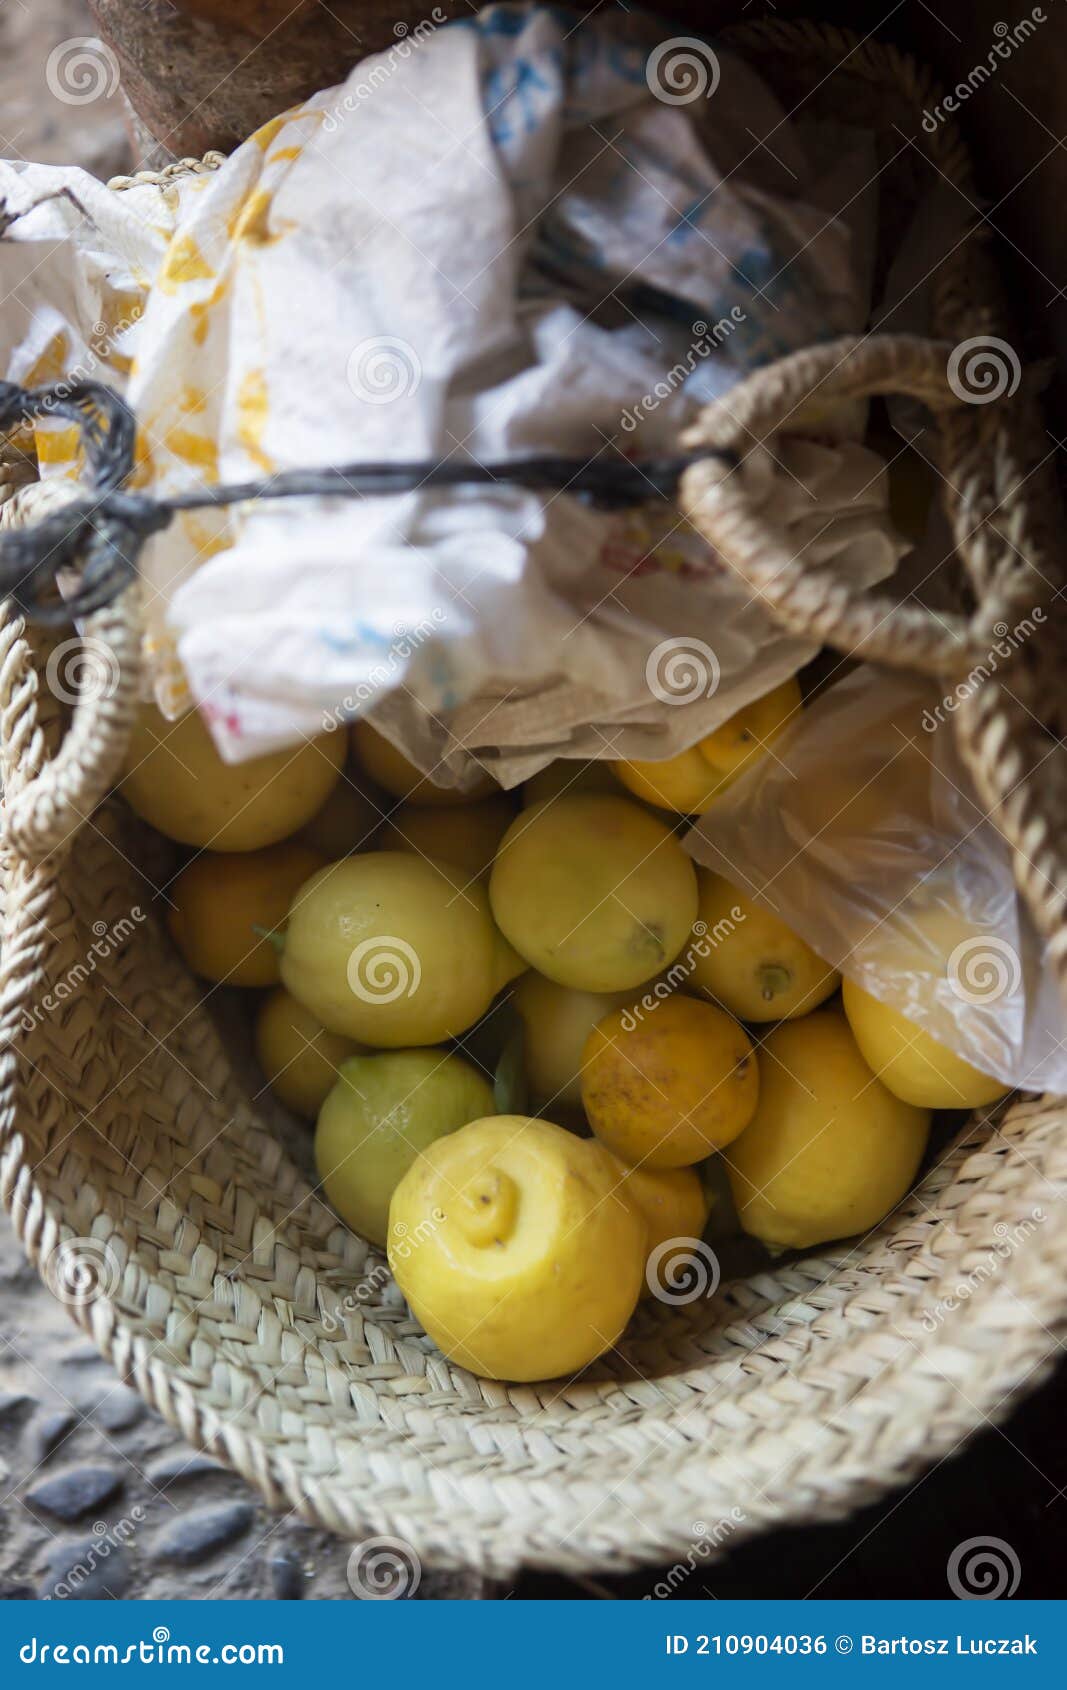 lemons in buckets, chefchouen morocco